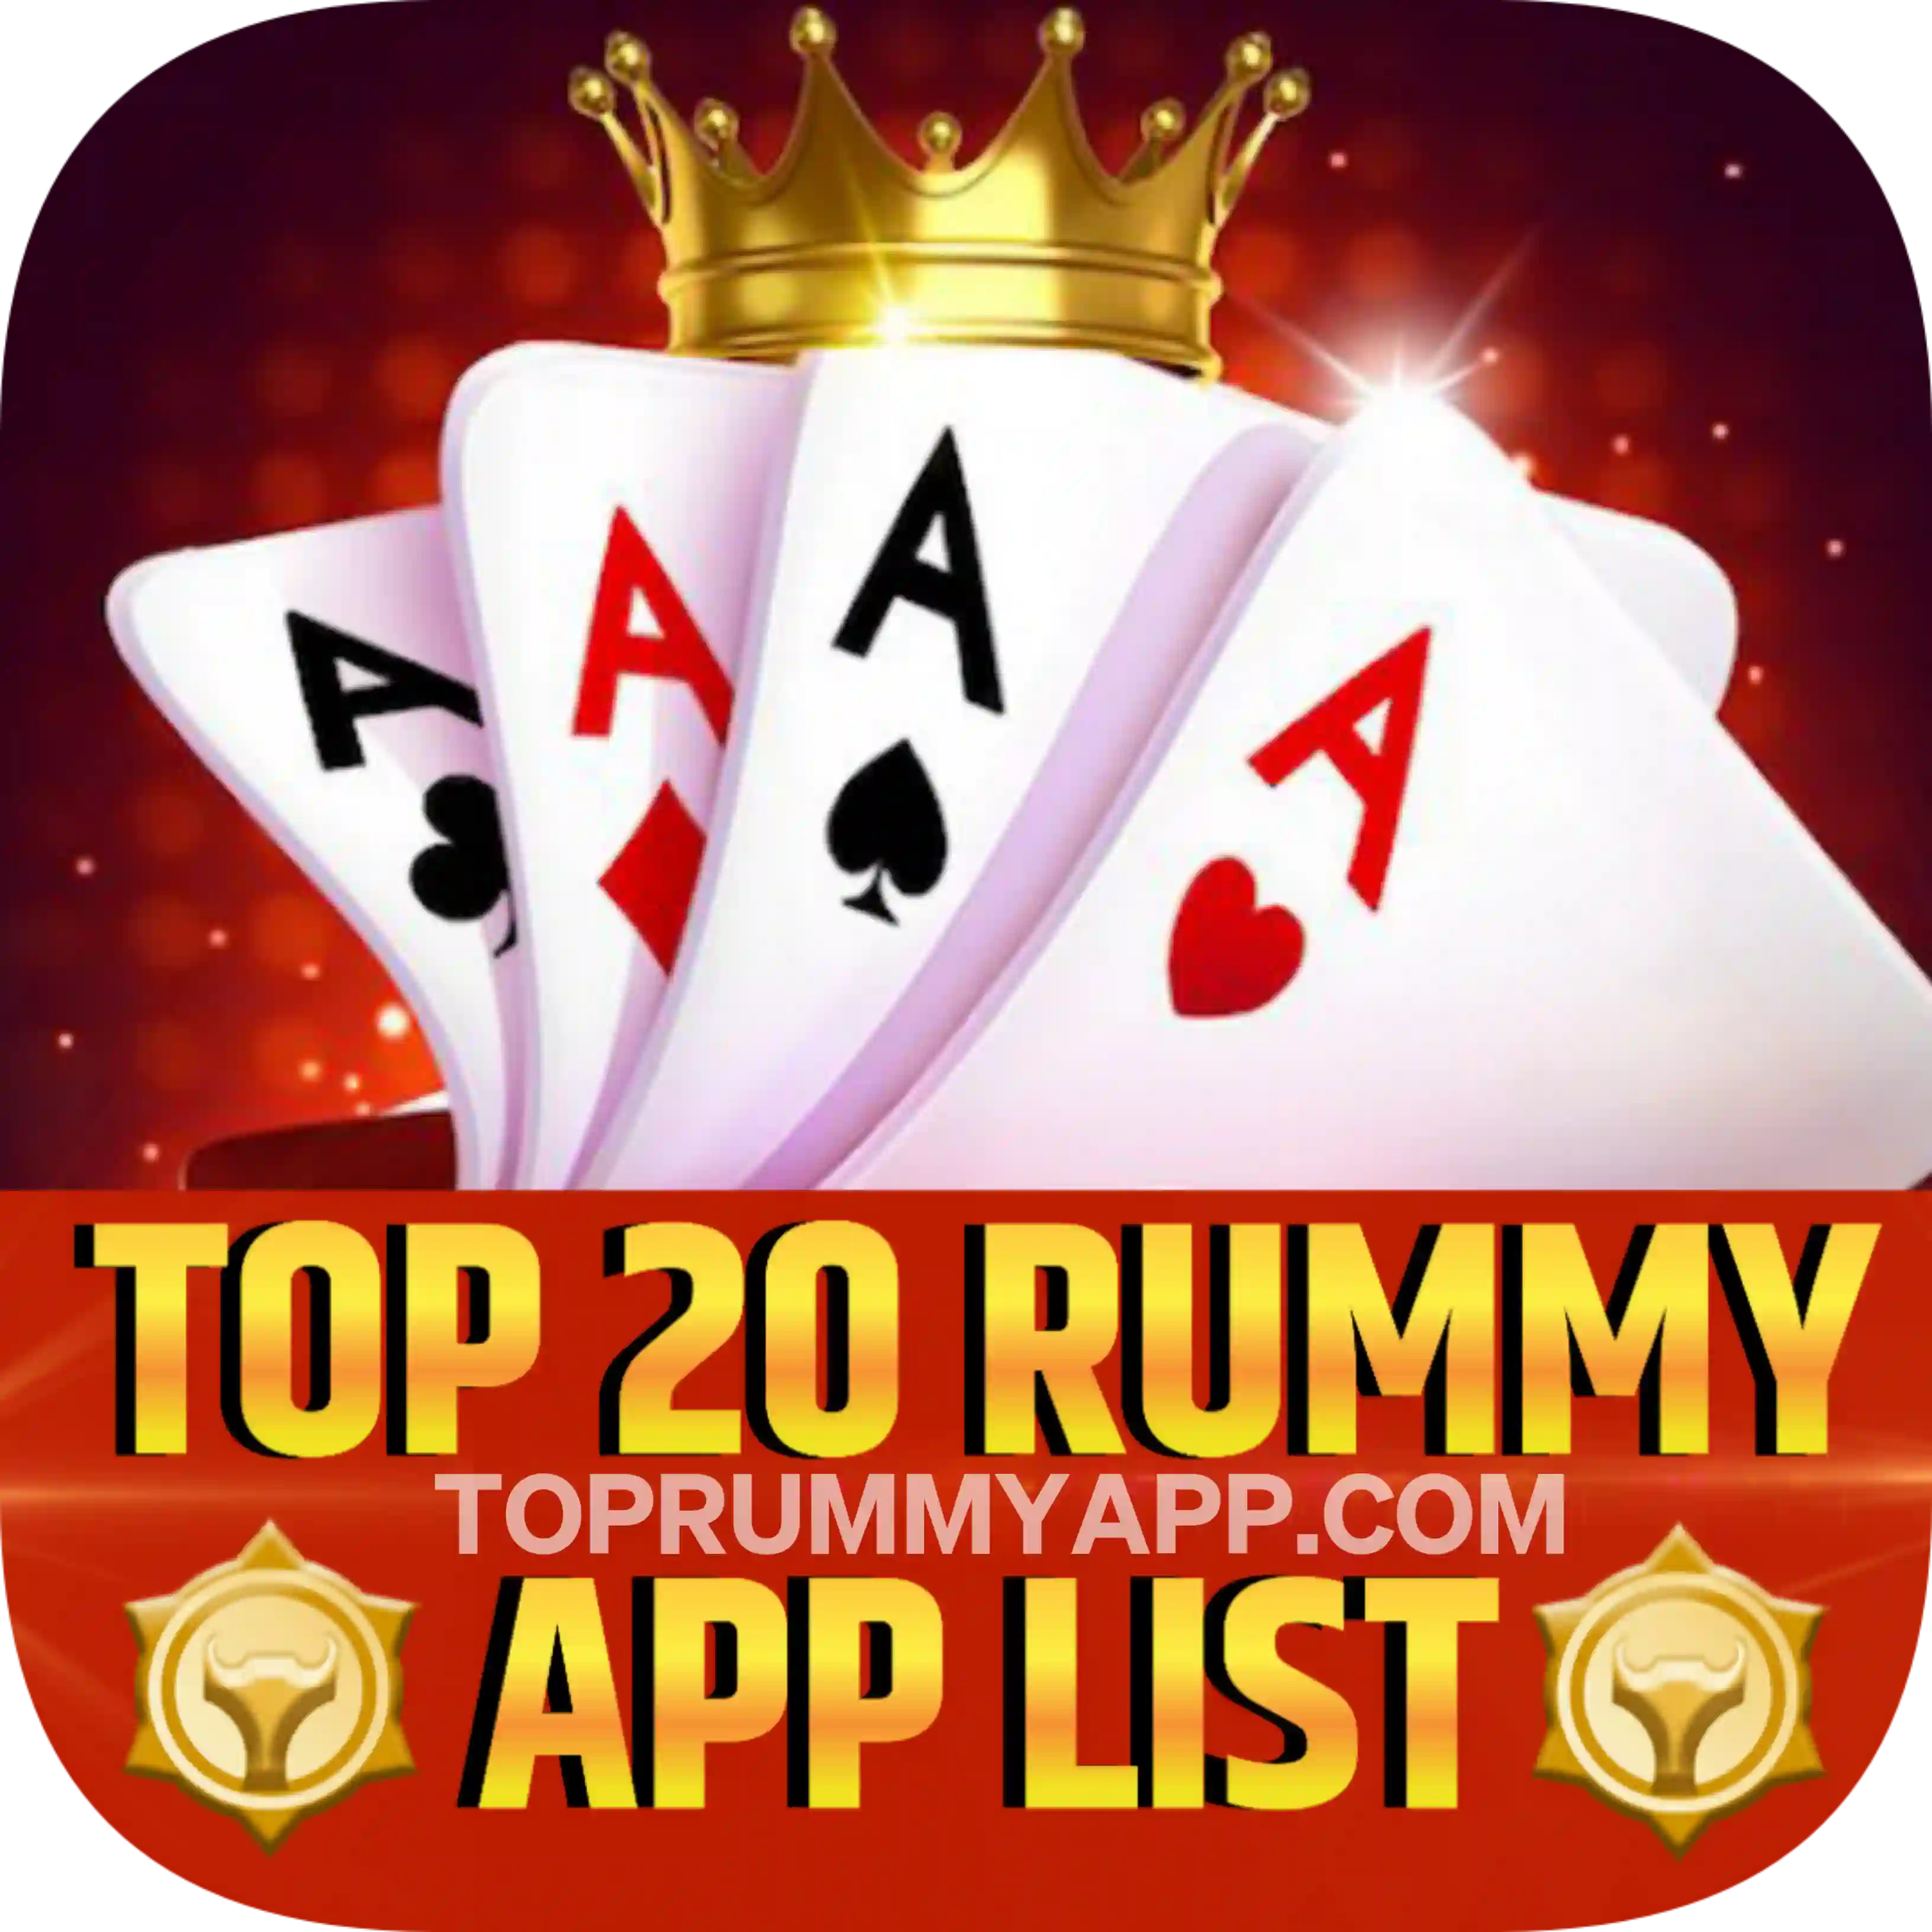 Top 20 Rummy App List - Top 20 Rummy Apps List